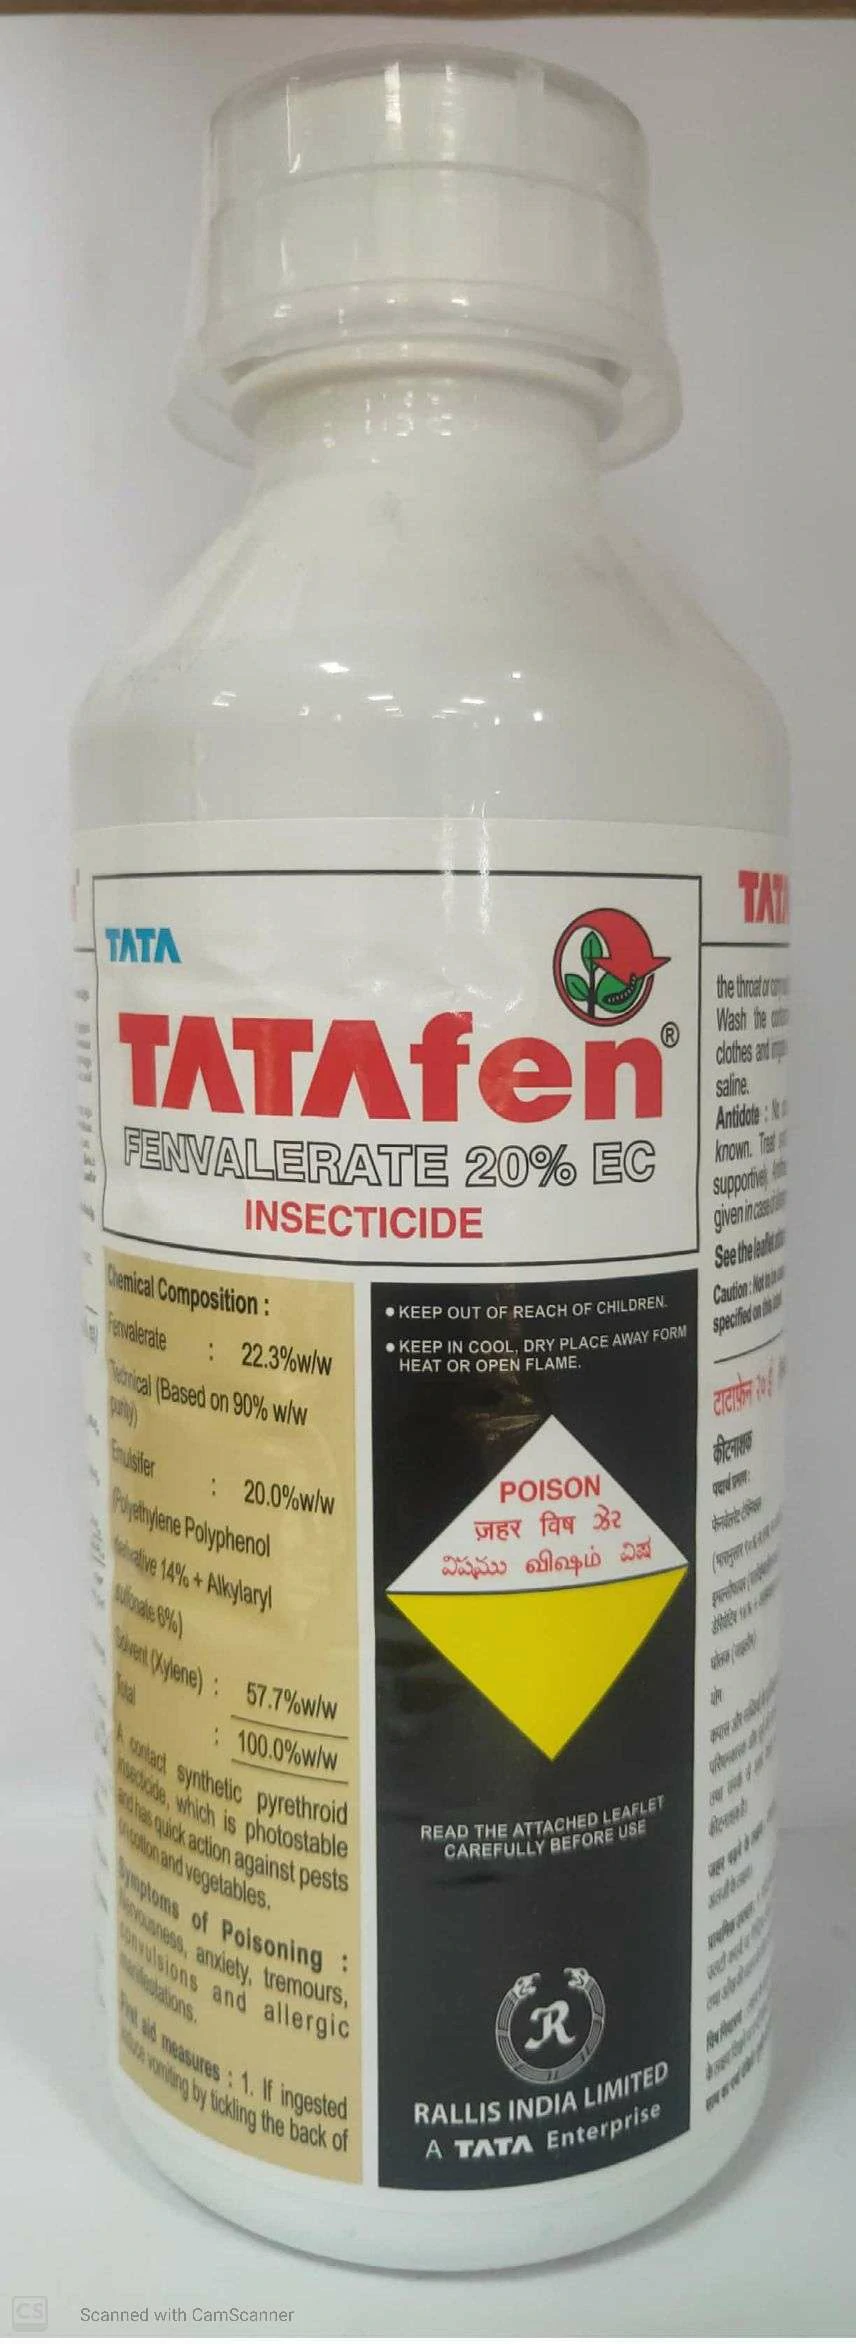 Tata Tatafen